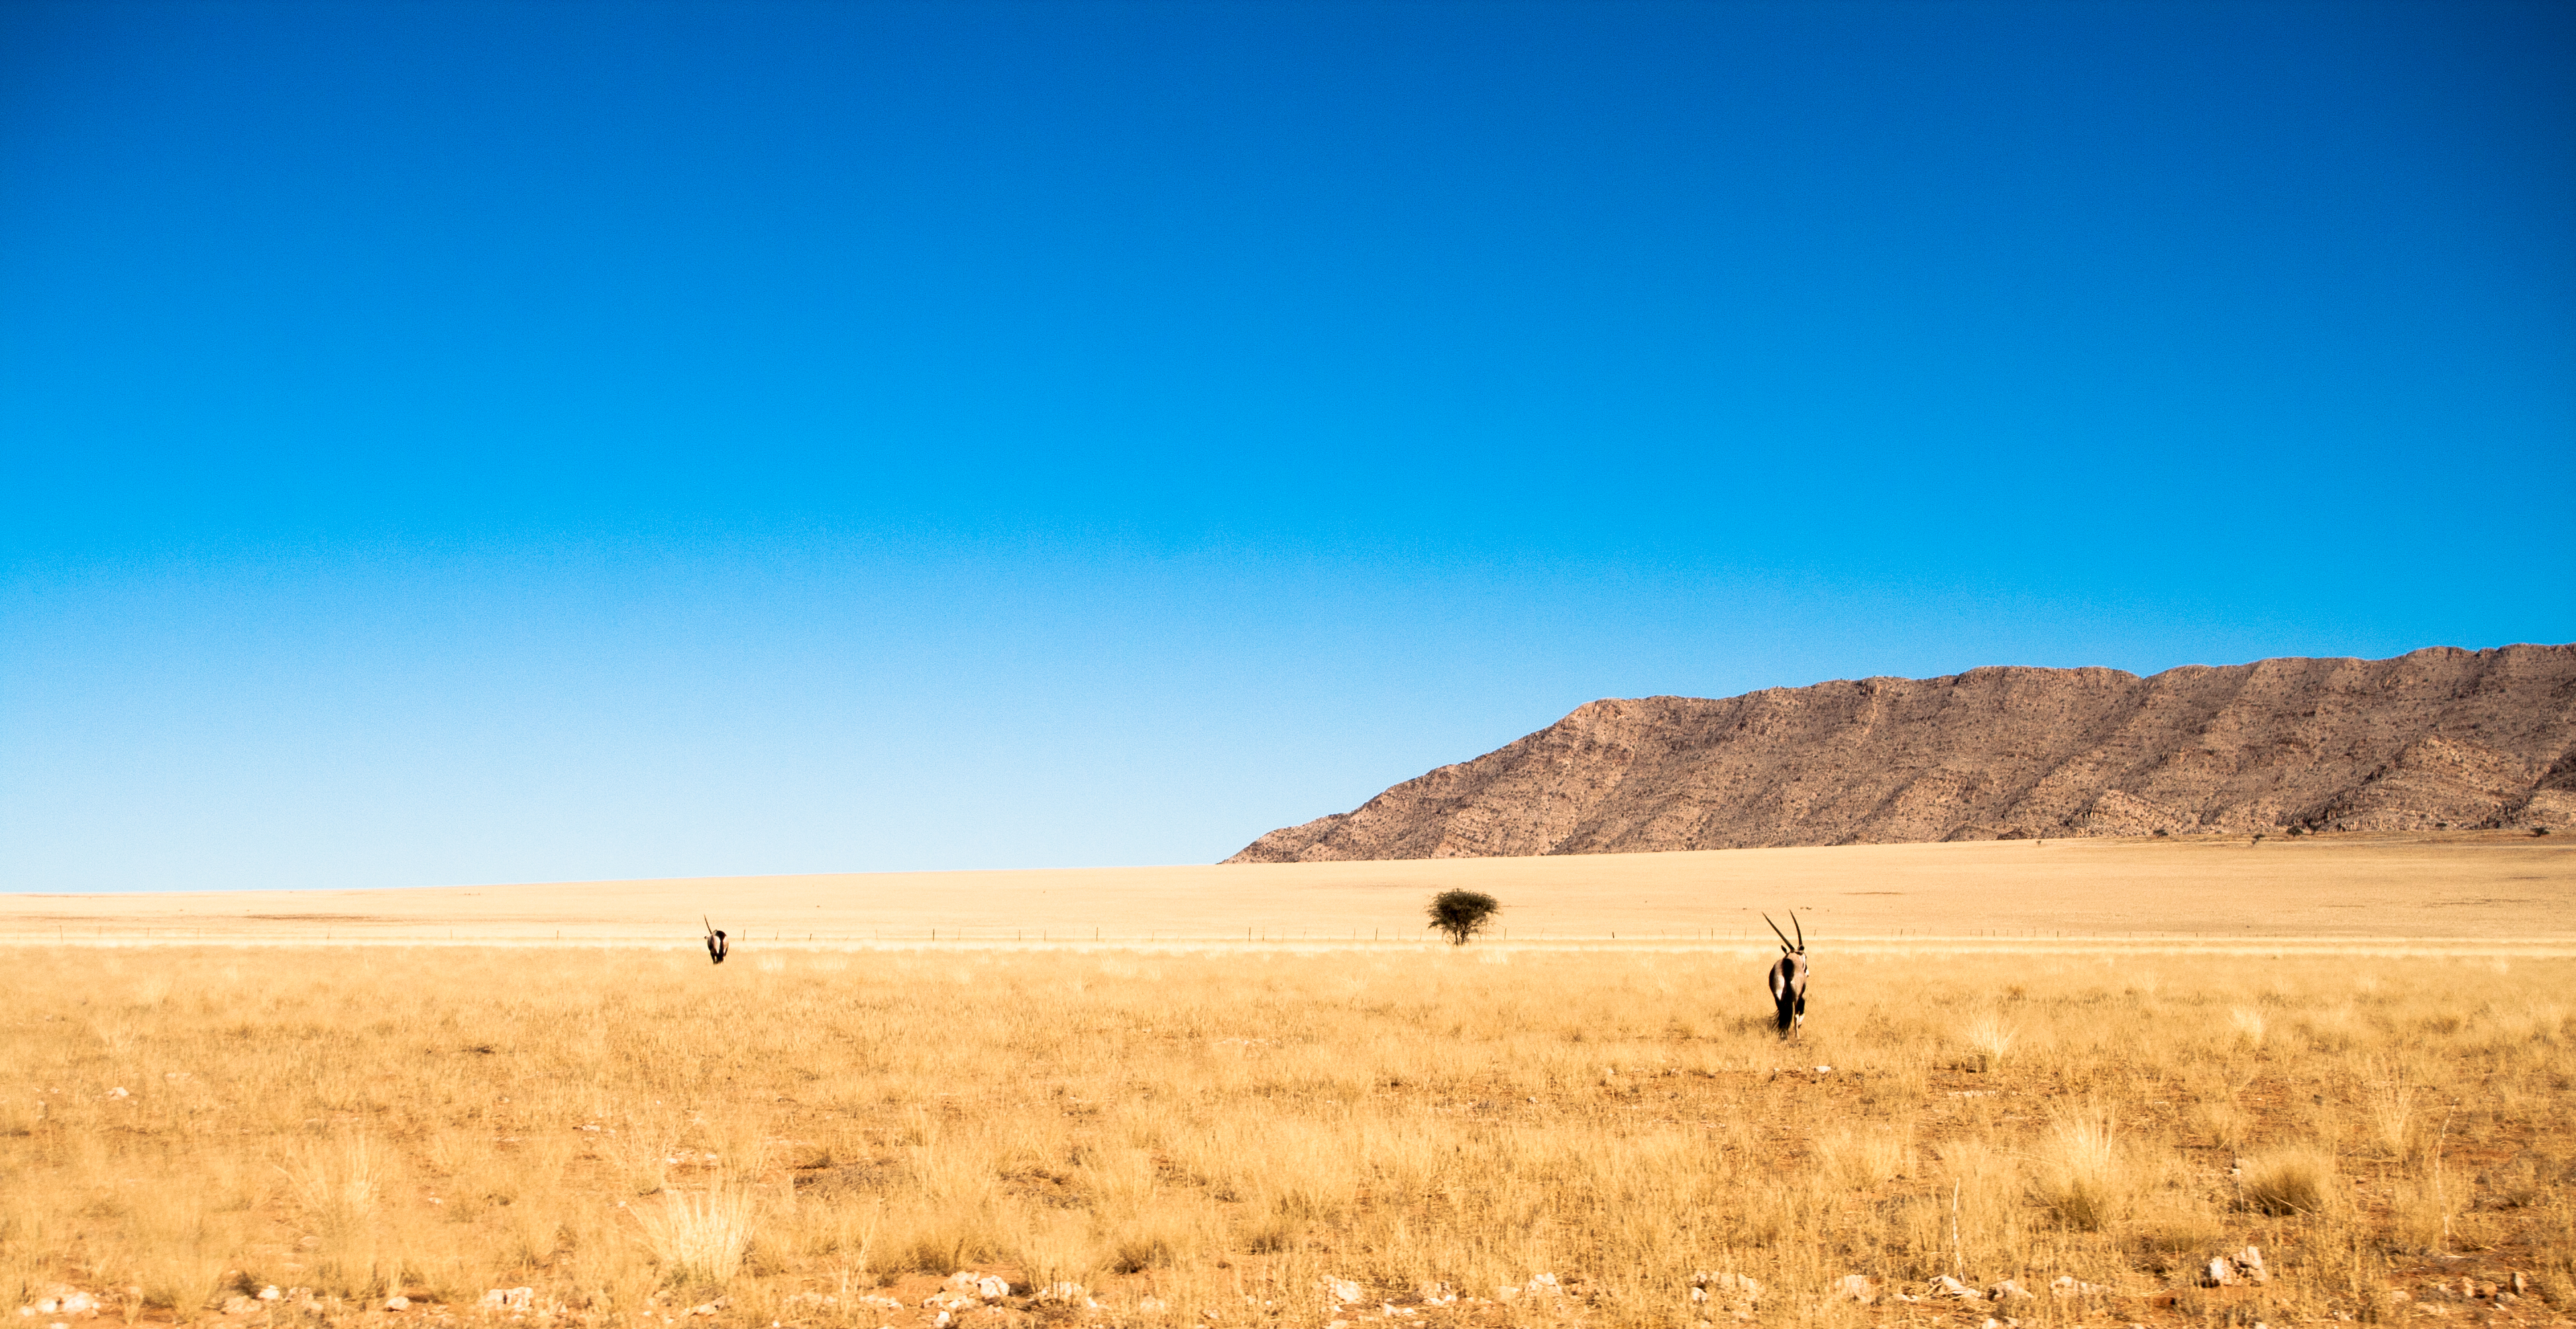 Namibian grasslands